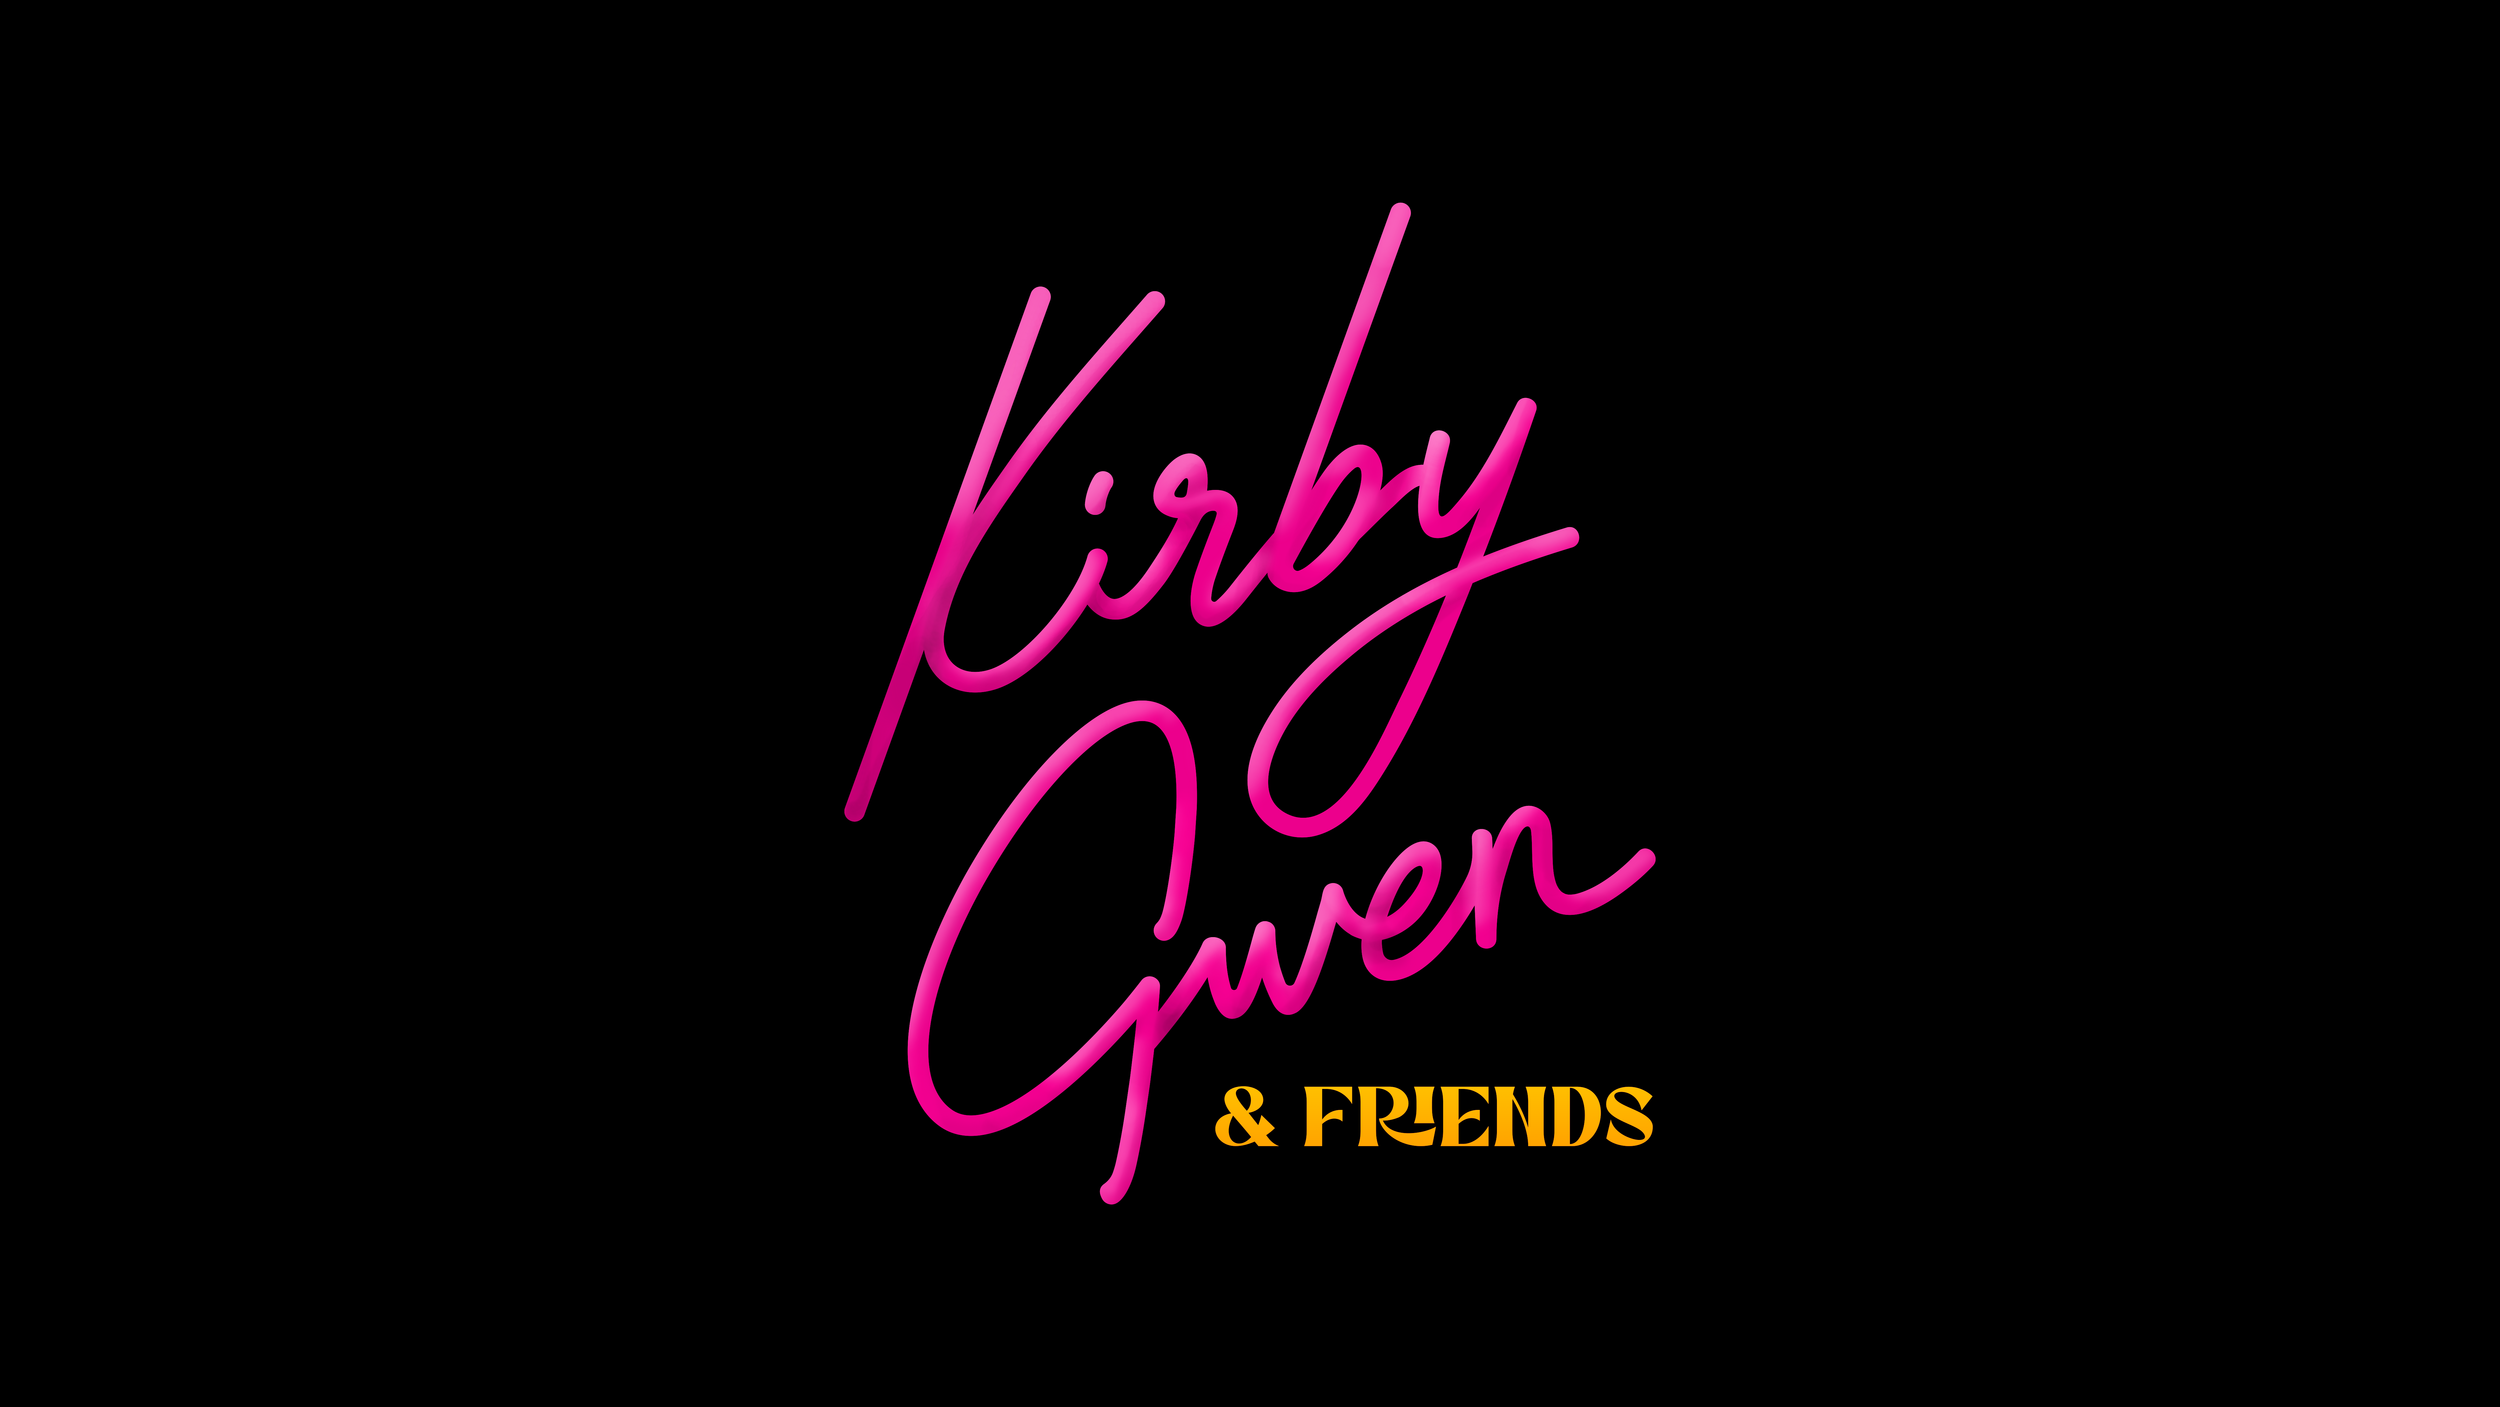 KirbyGwen_logo_vert_smooth_black_bg_150.png